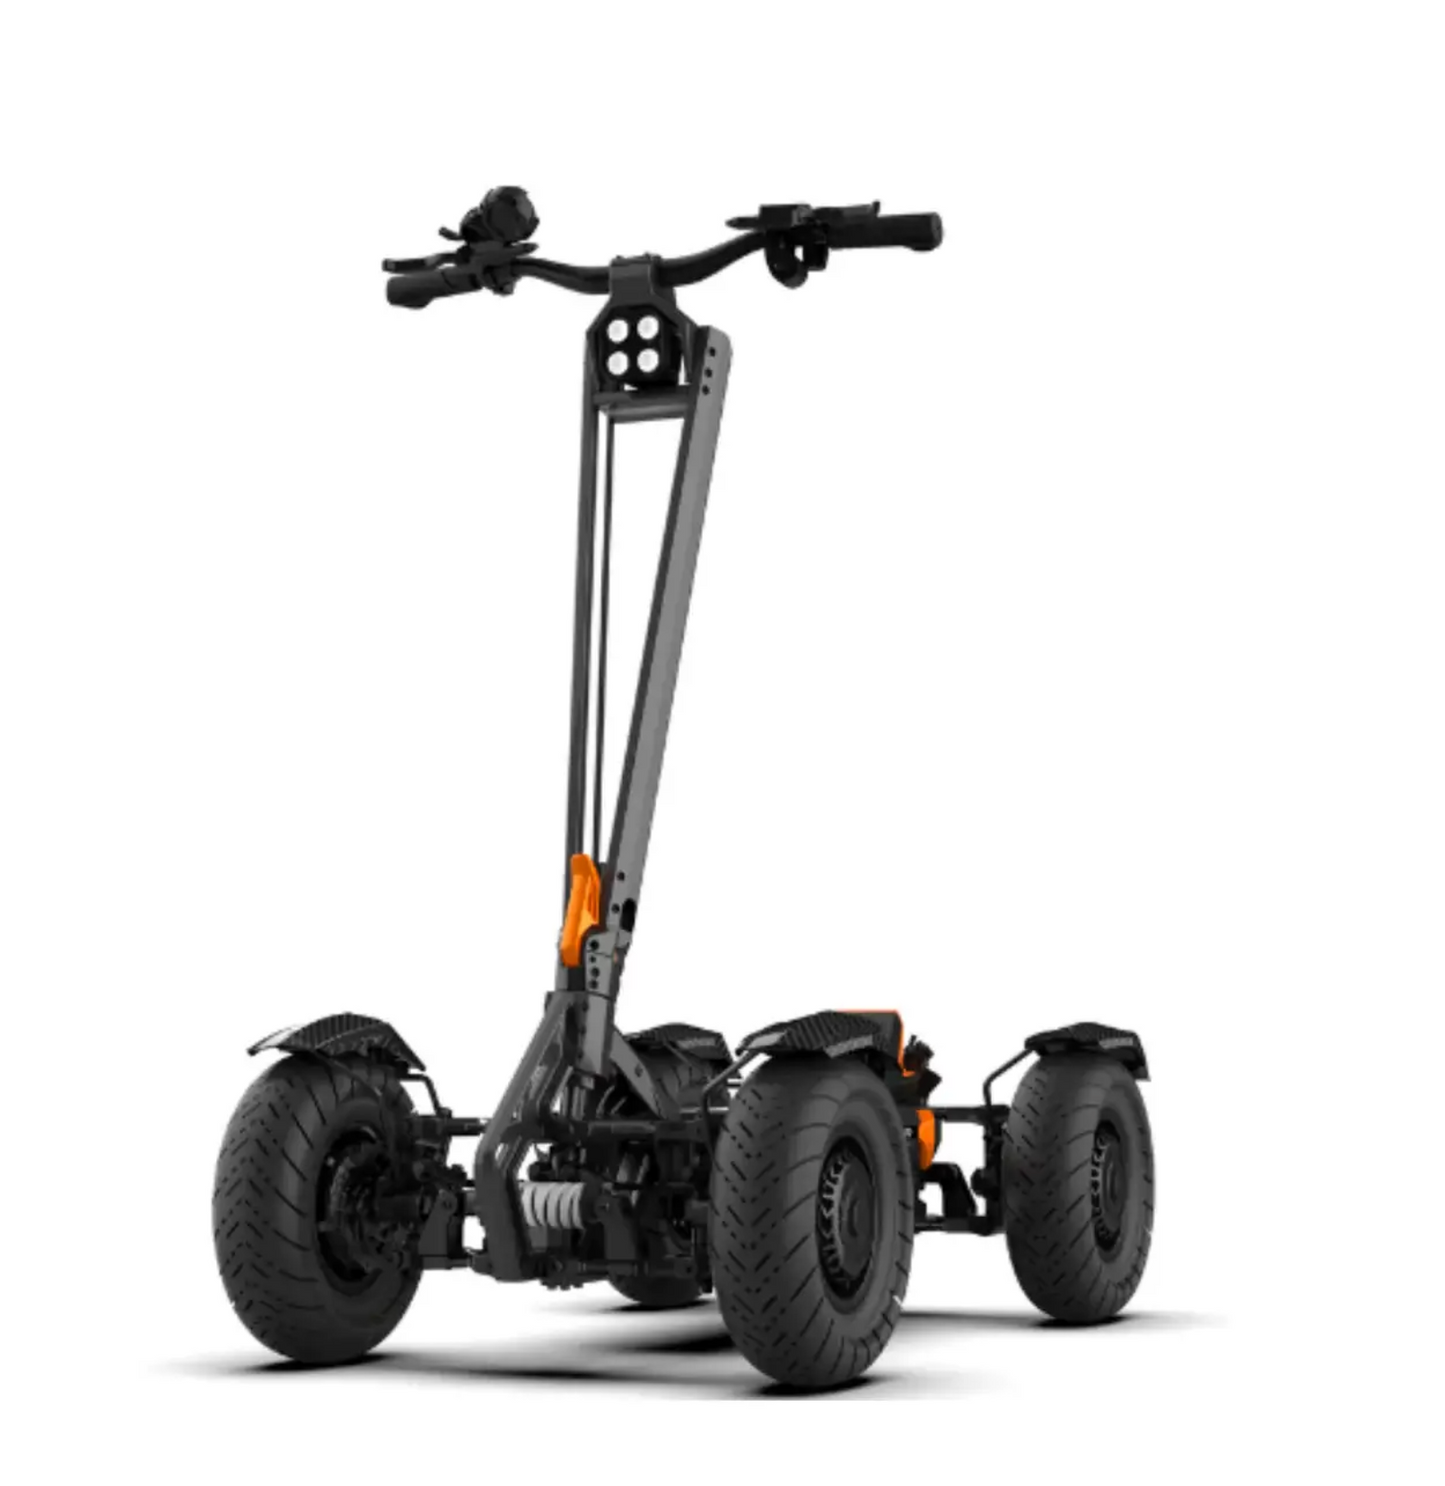 Teverun Tetra Four-Wheeled Electric Scooter